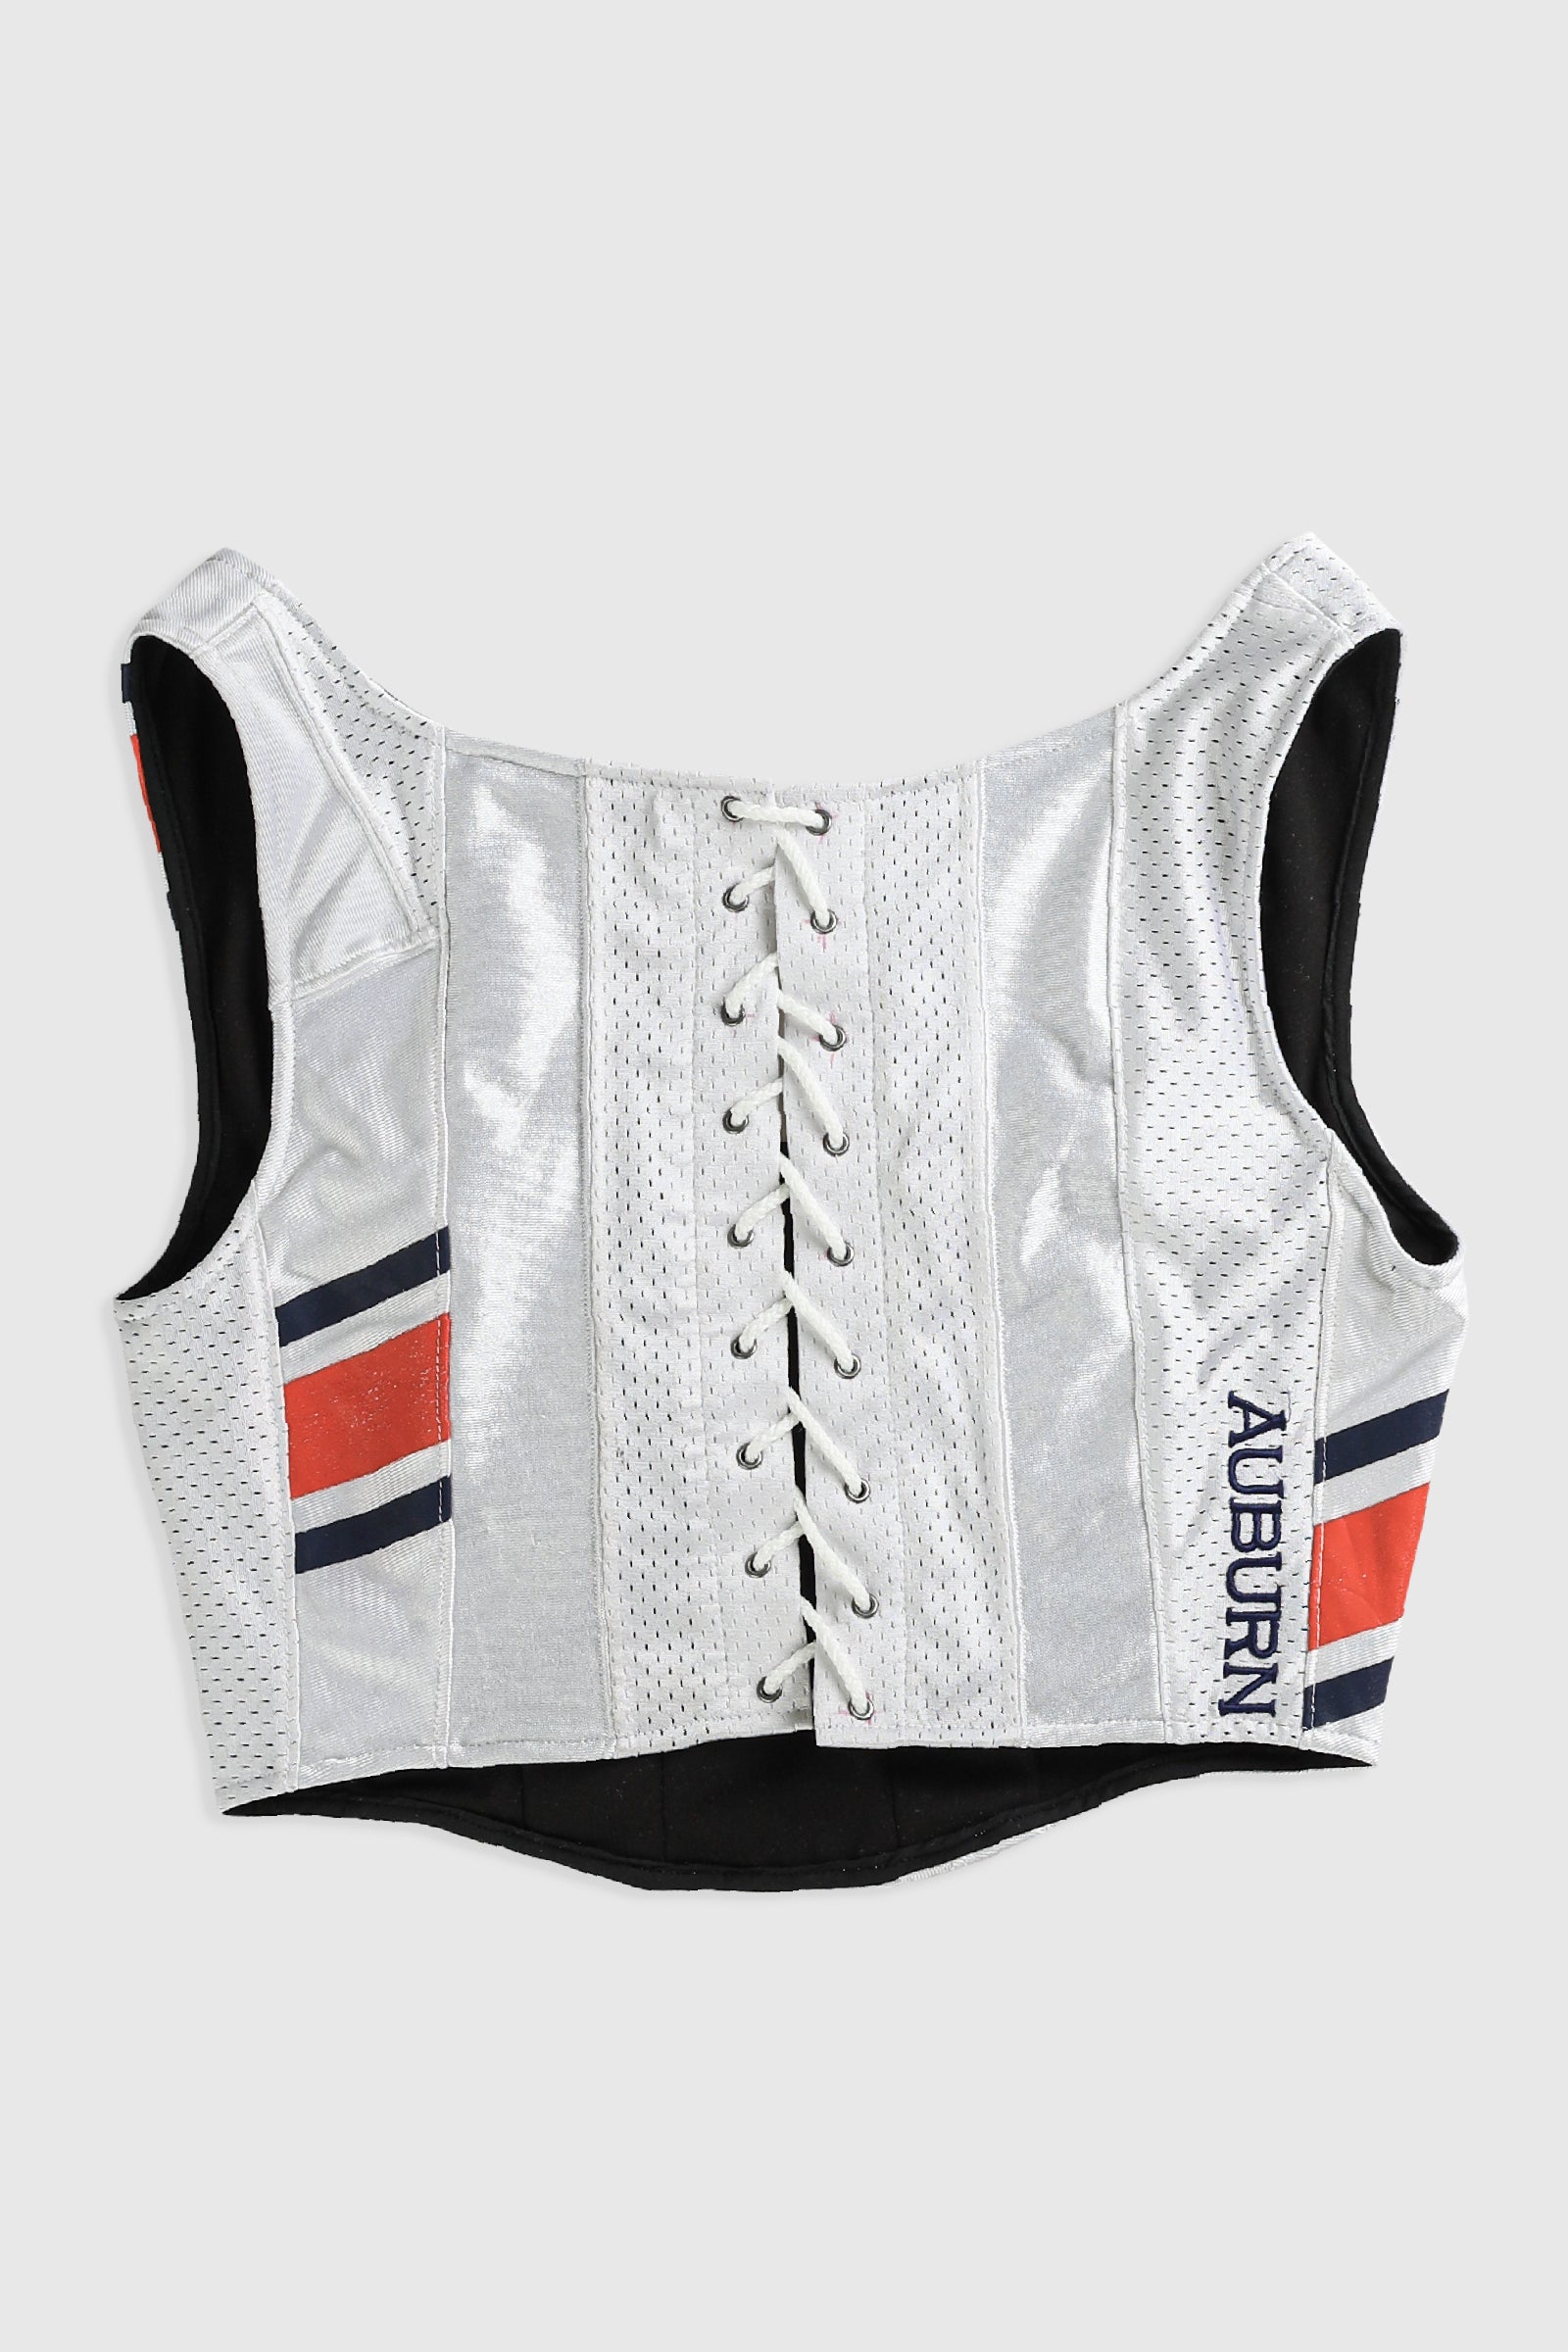 CUSTOM corset (ribbon straps) – REMYGIRL reworks